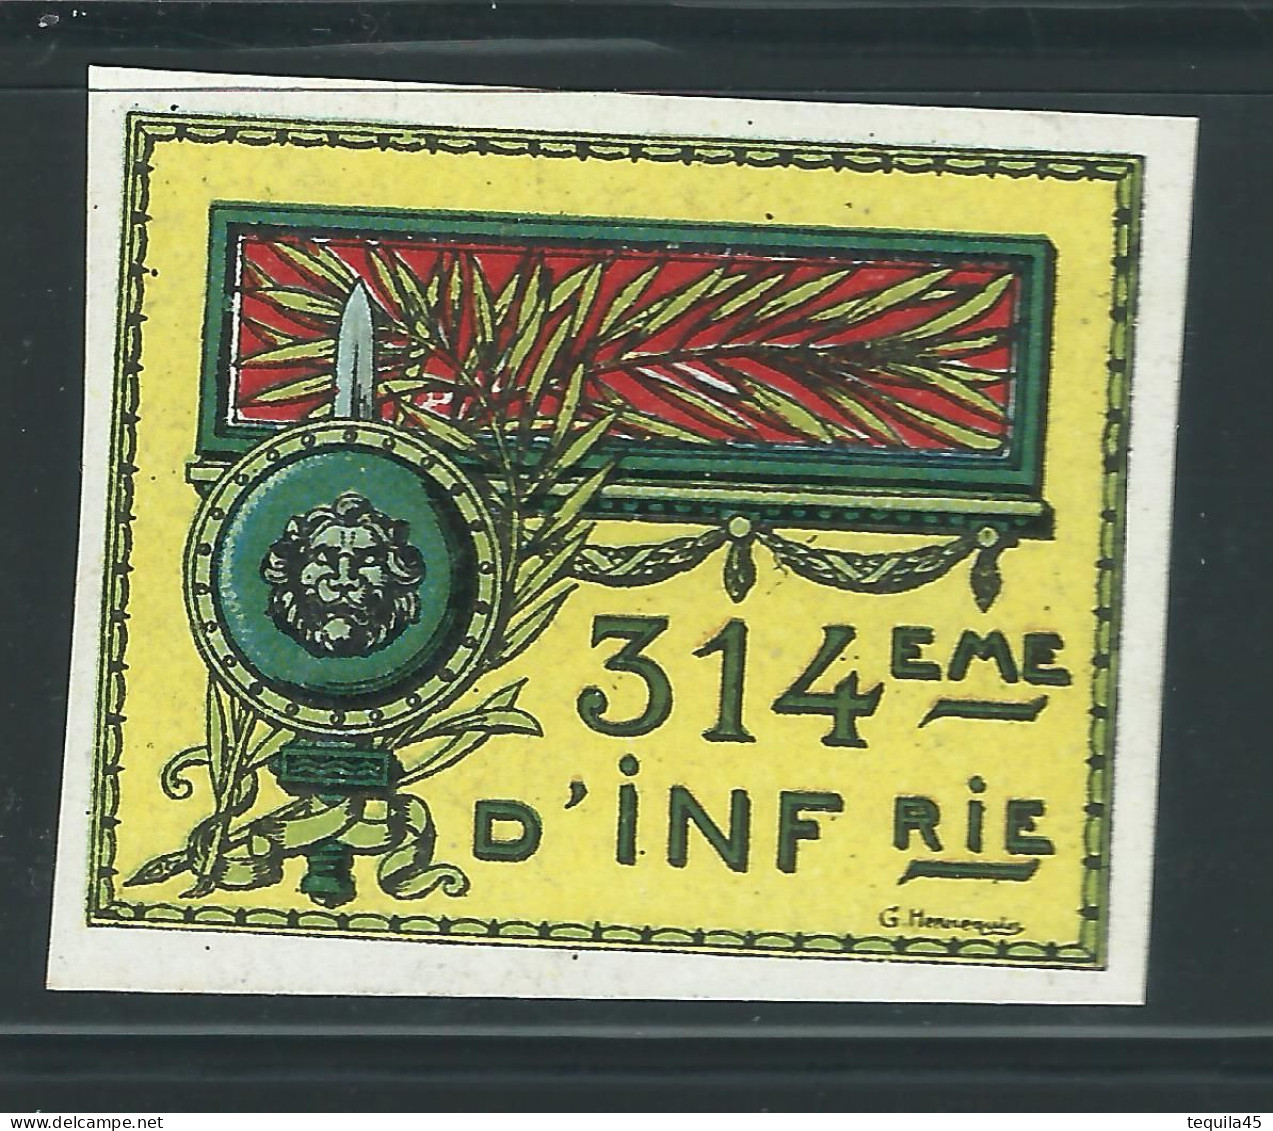 Rare : Vignette DELANDRE - France 314 éme Régt D'infanterie De Ligne - 1914 -18 WWI WW1 Poster Stamp - Erinnophilie